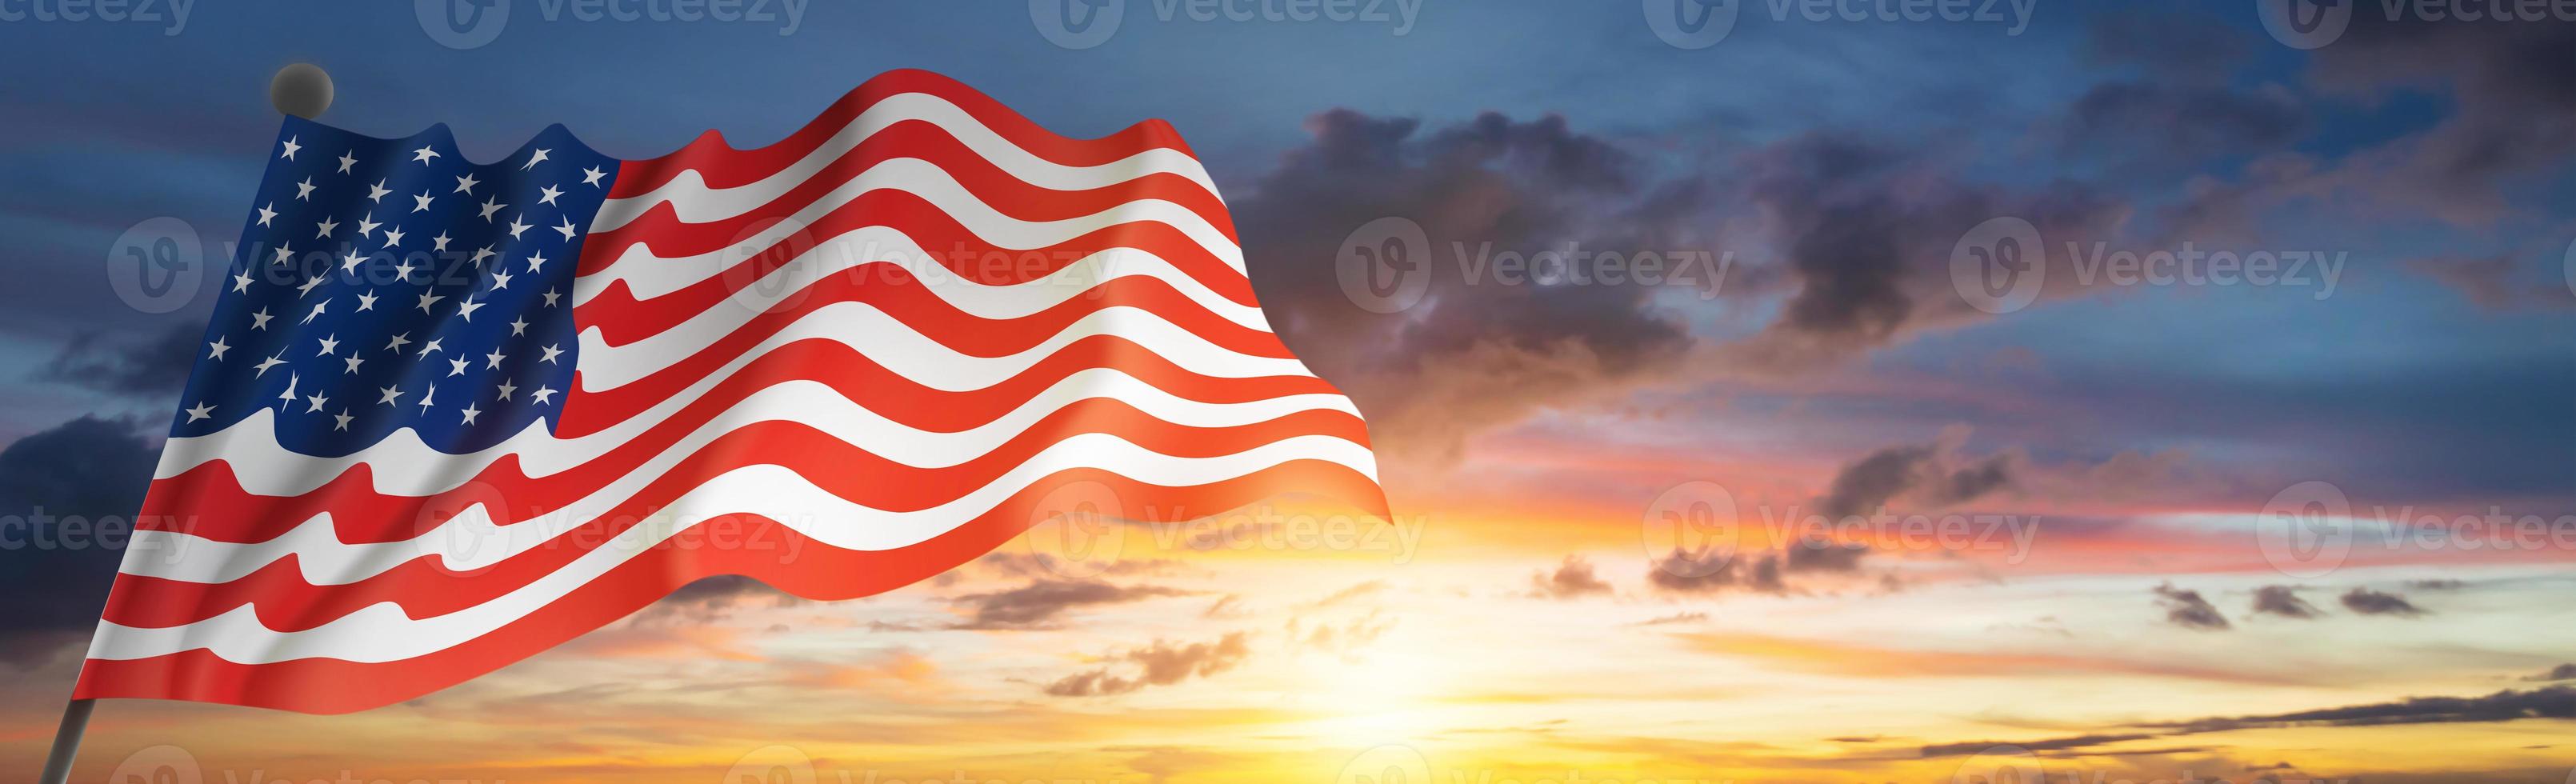 drapeau américain américain photo